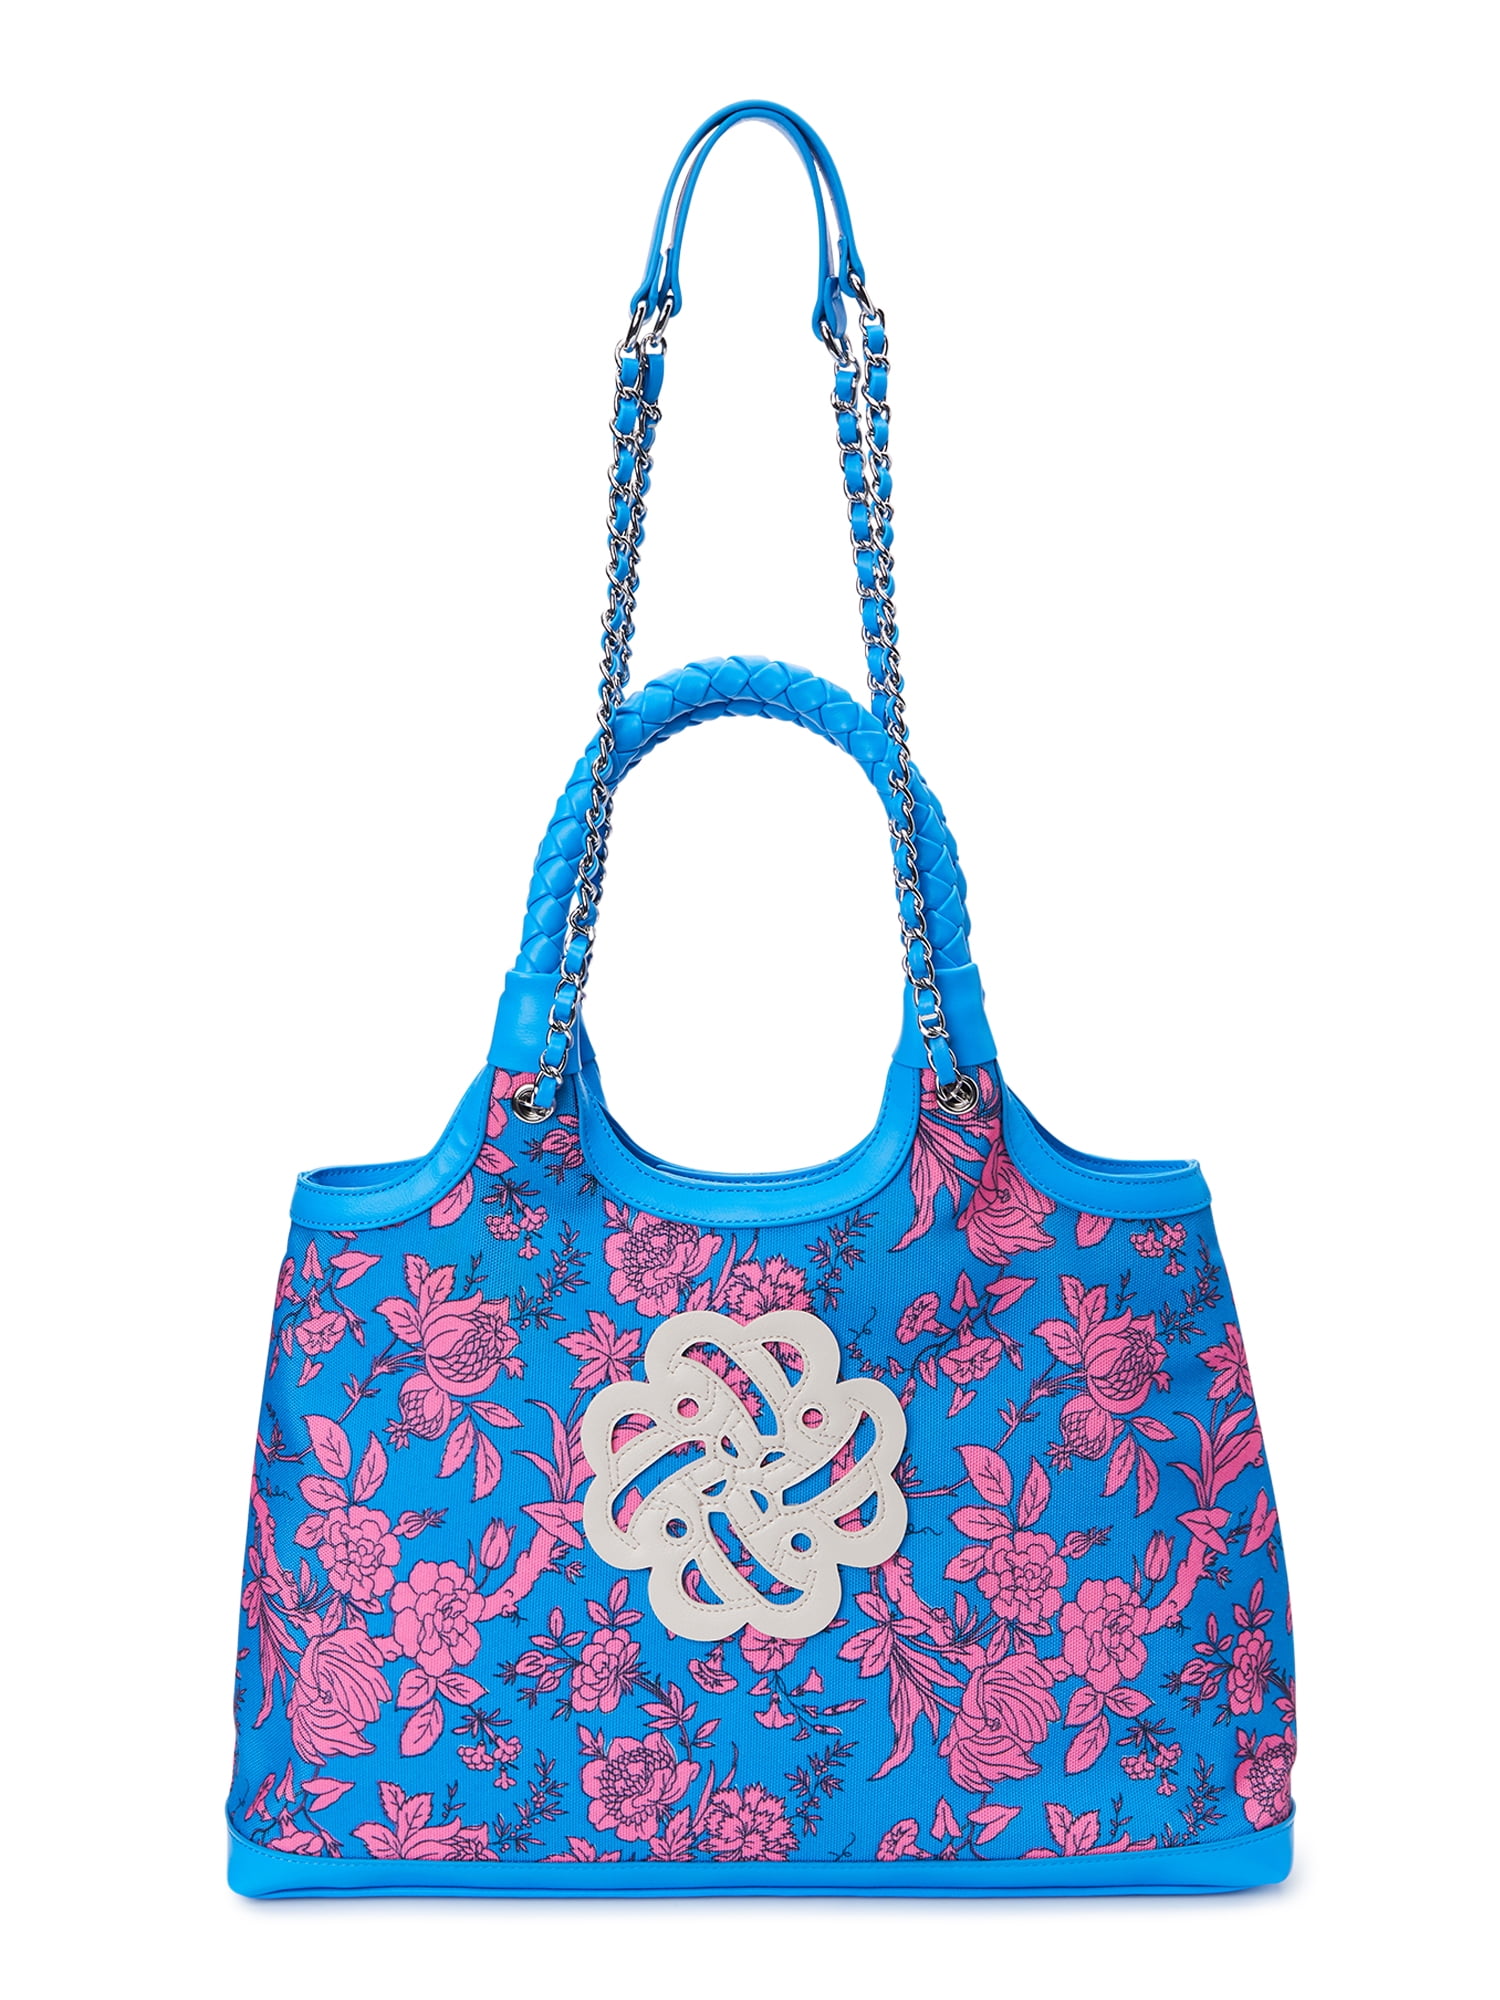 Sam & Libby Carina Women's Medium Canvas Tote Handbag, Pink and Blue